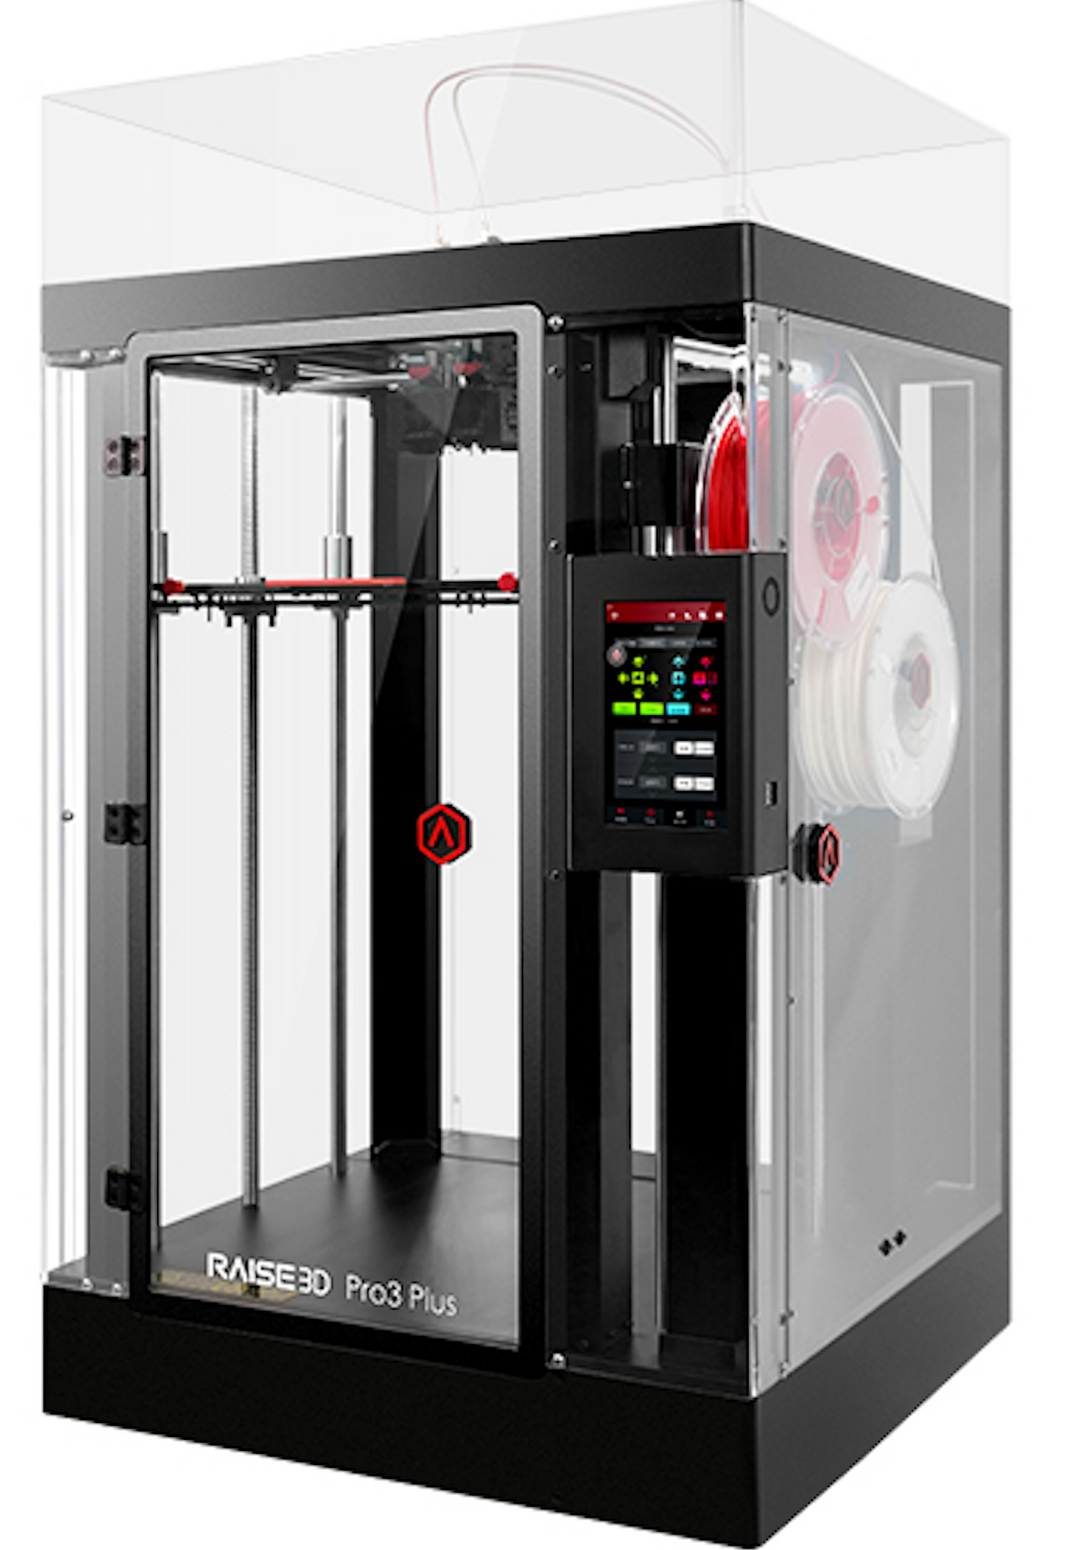 Raise3D Pro3 Plus 3D-Drucker- und Rollwagen-Kombipaket - [3dmaterial-shop]